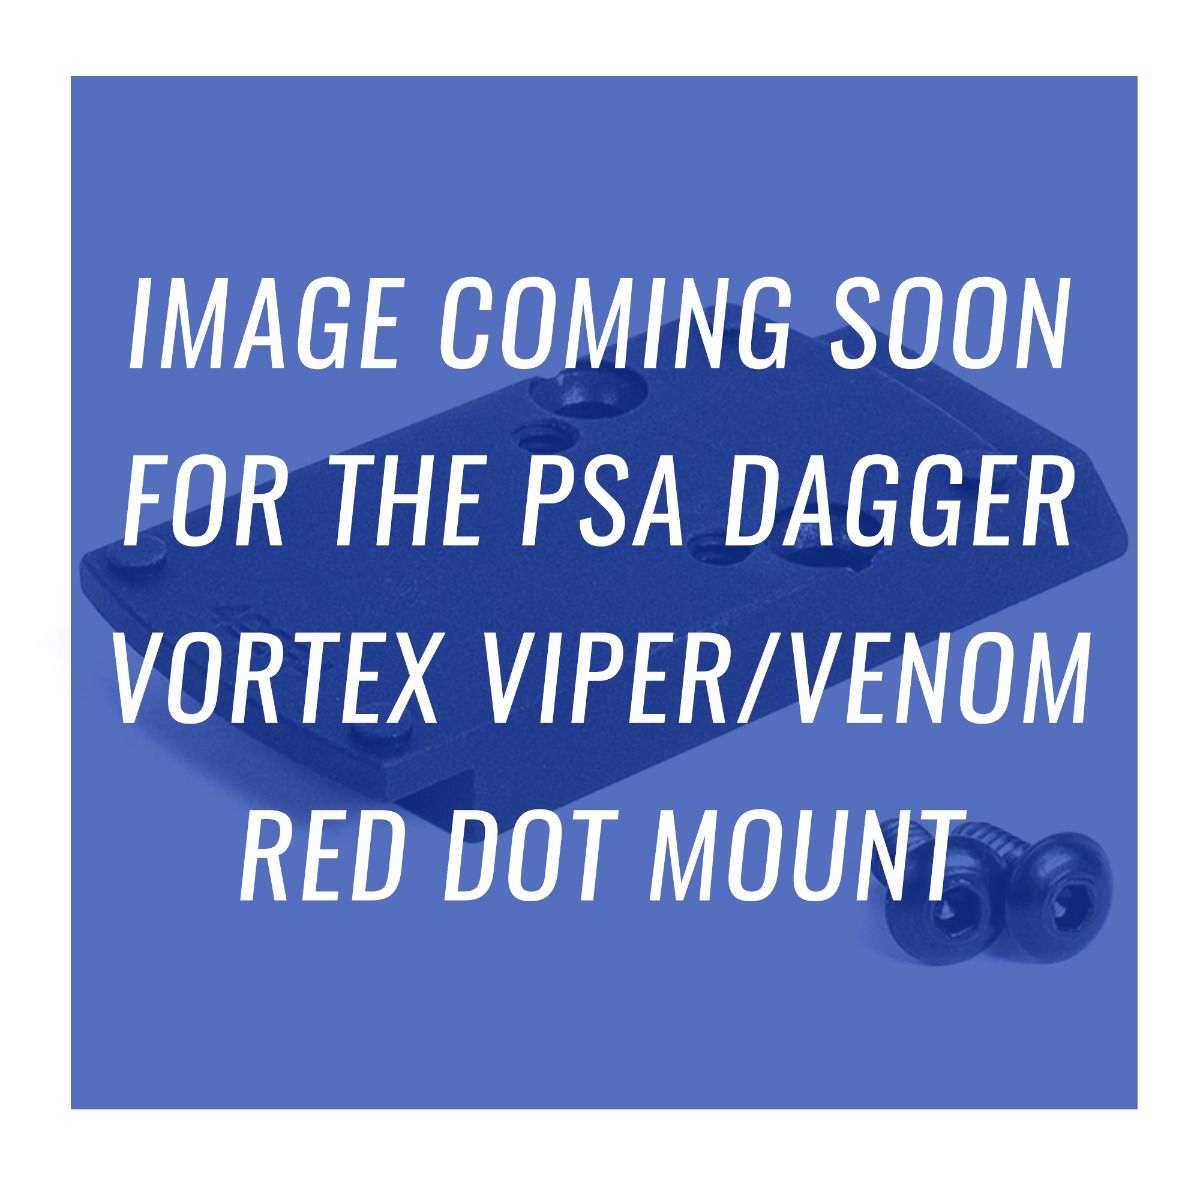 Vortex Viper / Venom Red Dot Sight Mount for PSA Dagger (fits Burris FastFire and Docter)